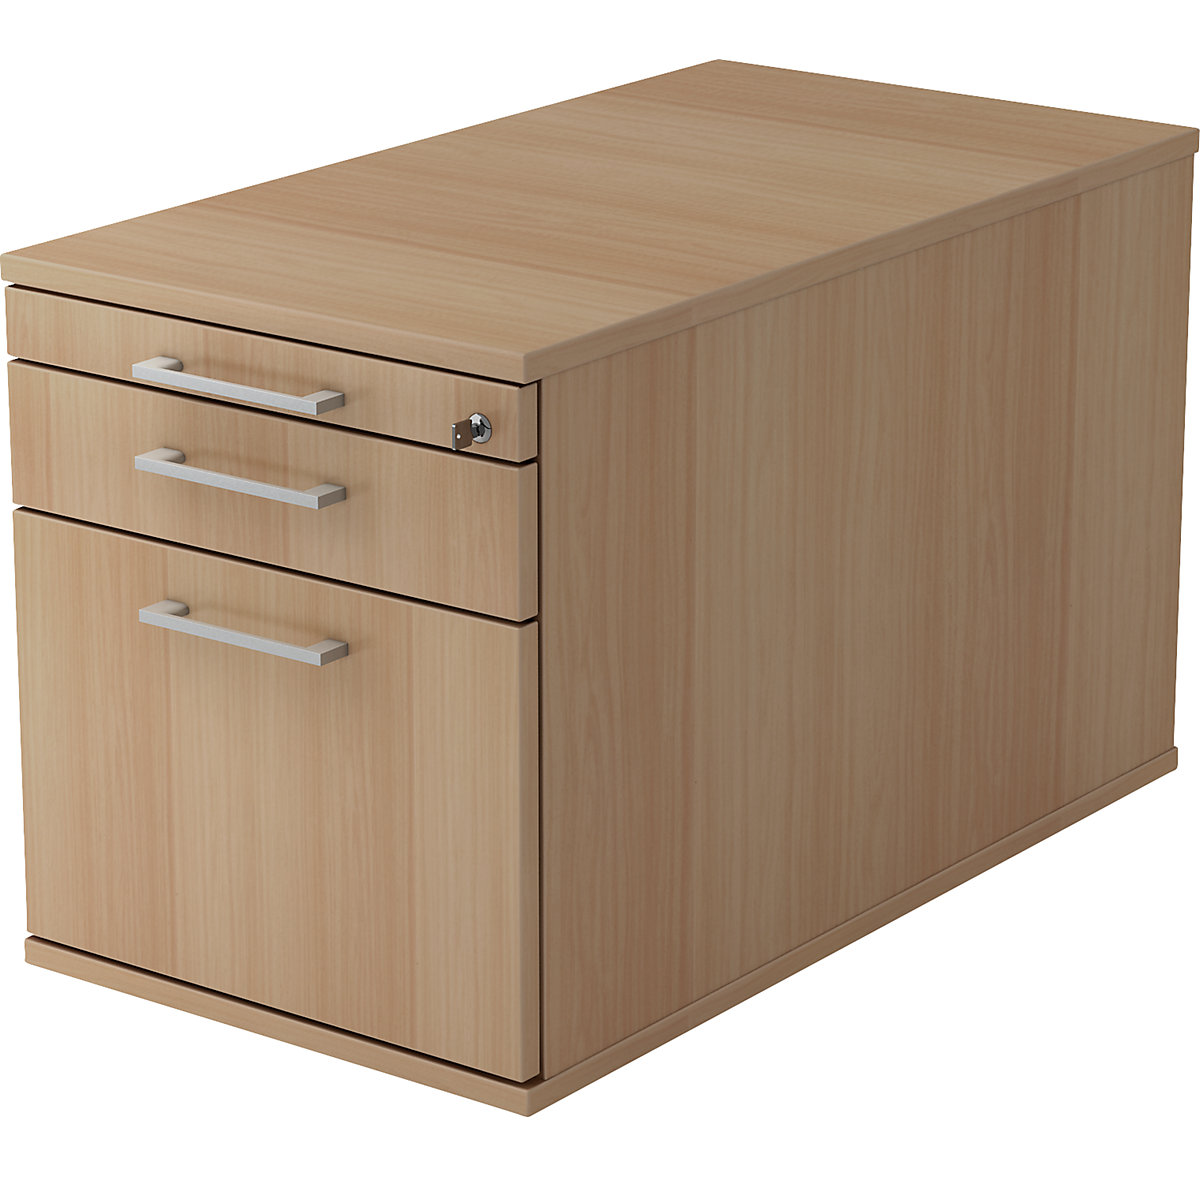 Mobile pedestal – eurokraft pro, 1 utensil drawer, 1 drawer, 1 file suspension drawer, depth 800 mm, walnut finish-13